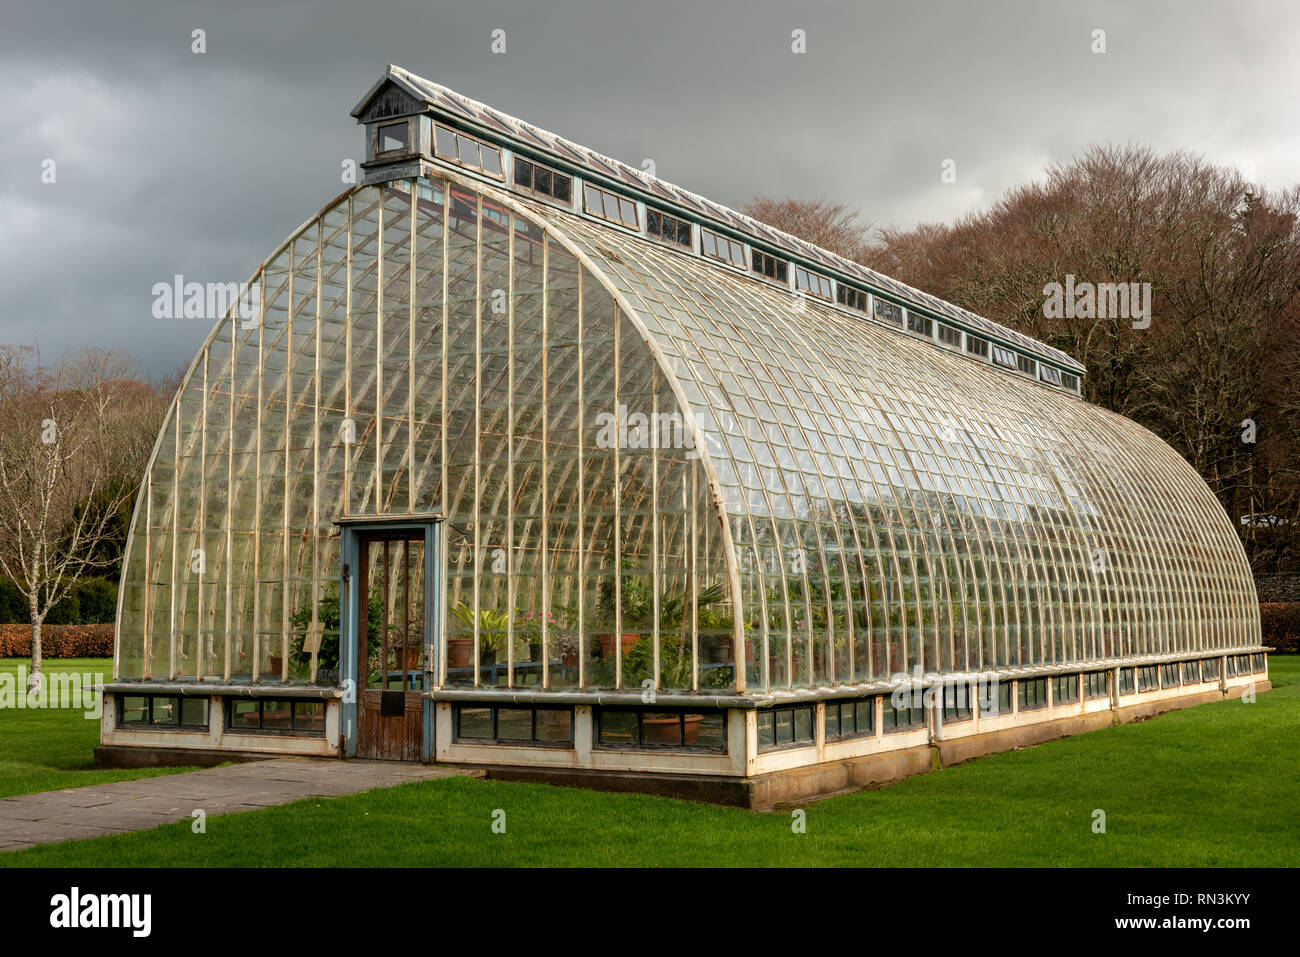 Picturesque Edwardian greenhouse glasshouse or Botanical hothouse, Muckross House and Gardens grounds, Killarney National Park, County Kerry, Ireland Stock Photo